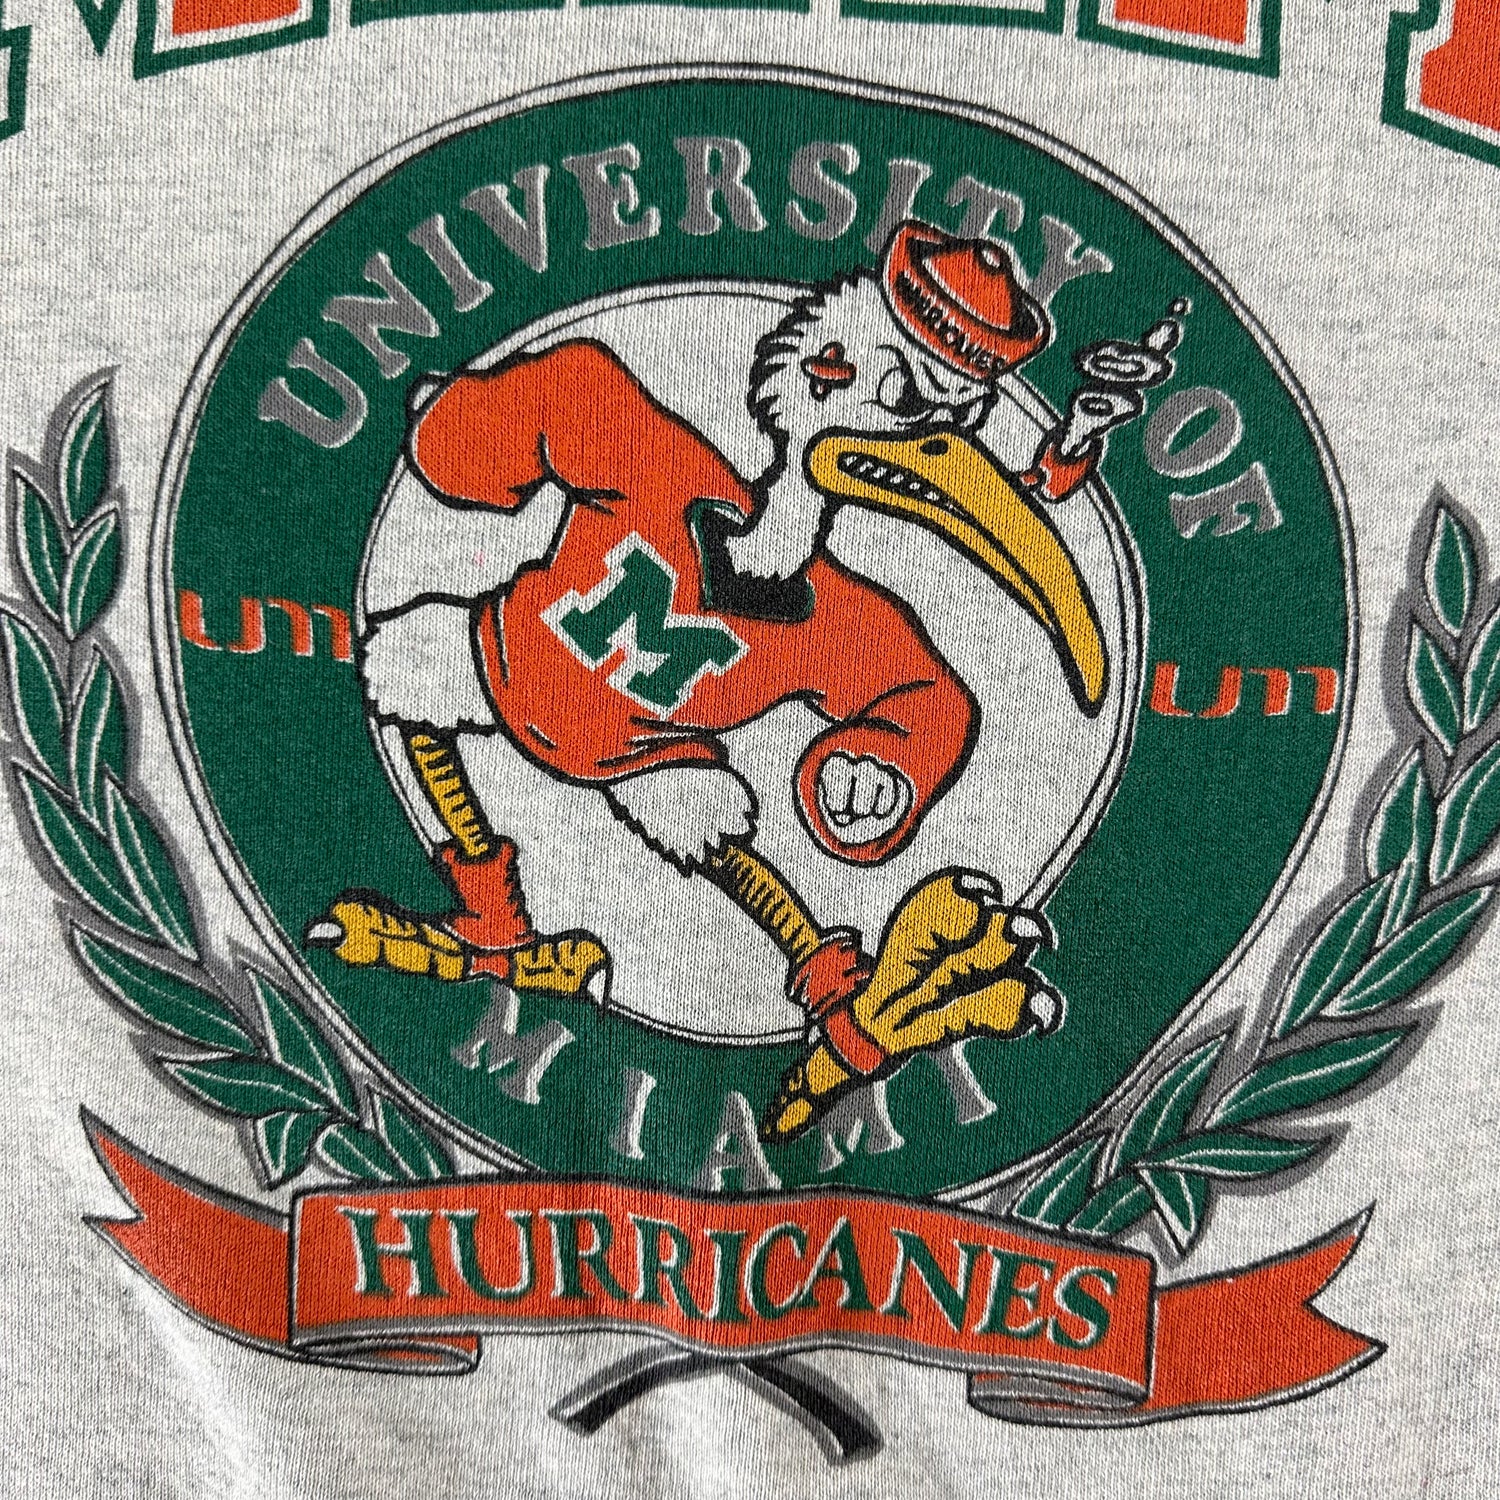 Vintage 1990s University of Miami Sweatshirt size Large